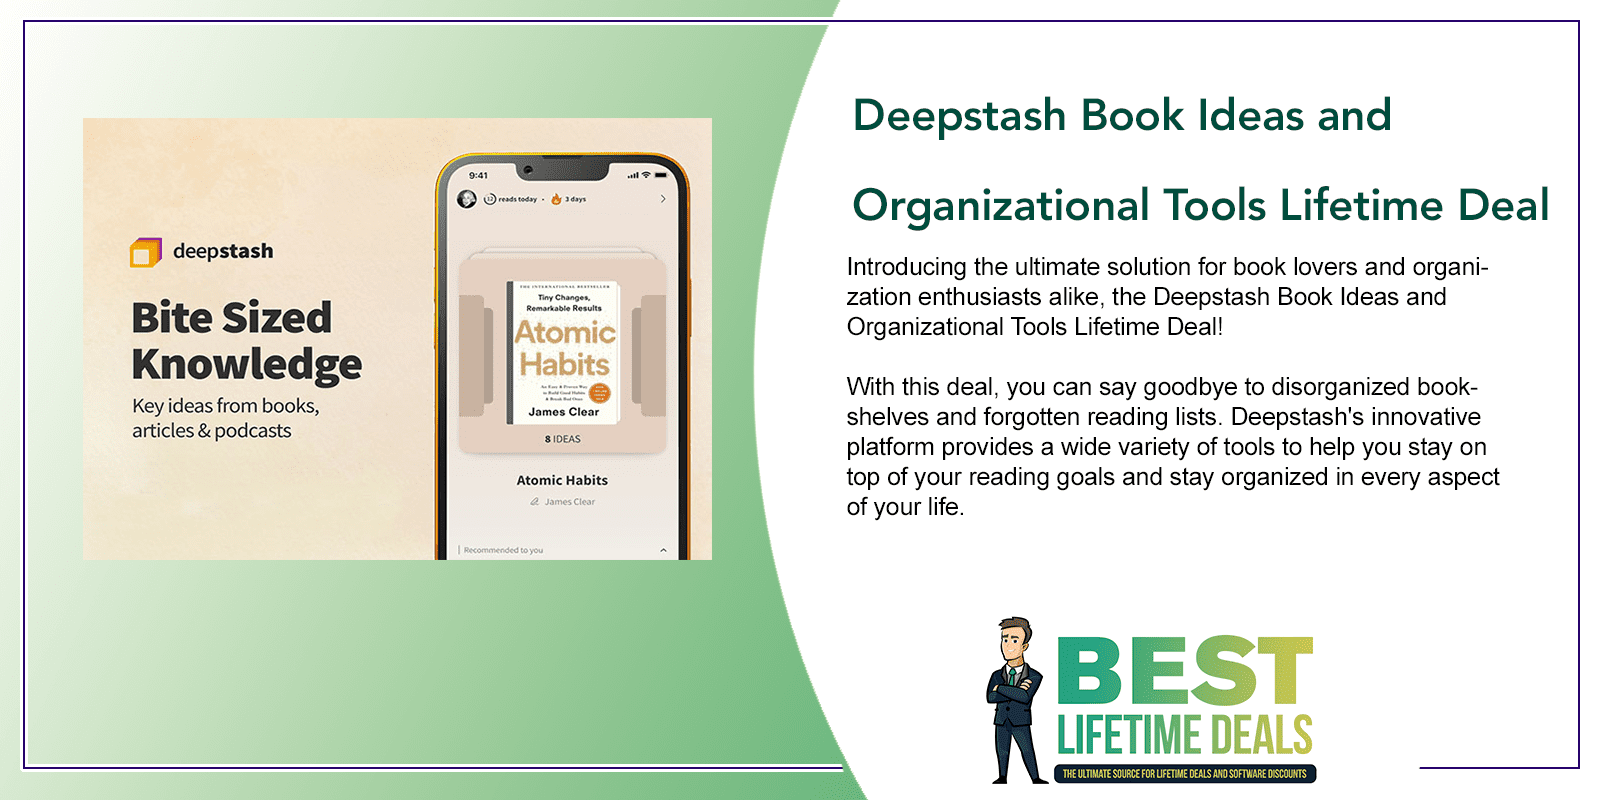 Deepstash Book Ideas and Organizational Tools Lifetime Deal Featured Image